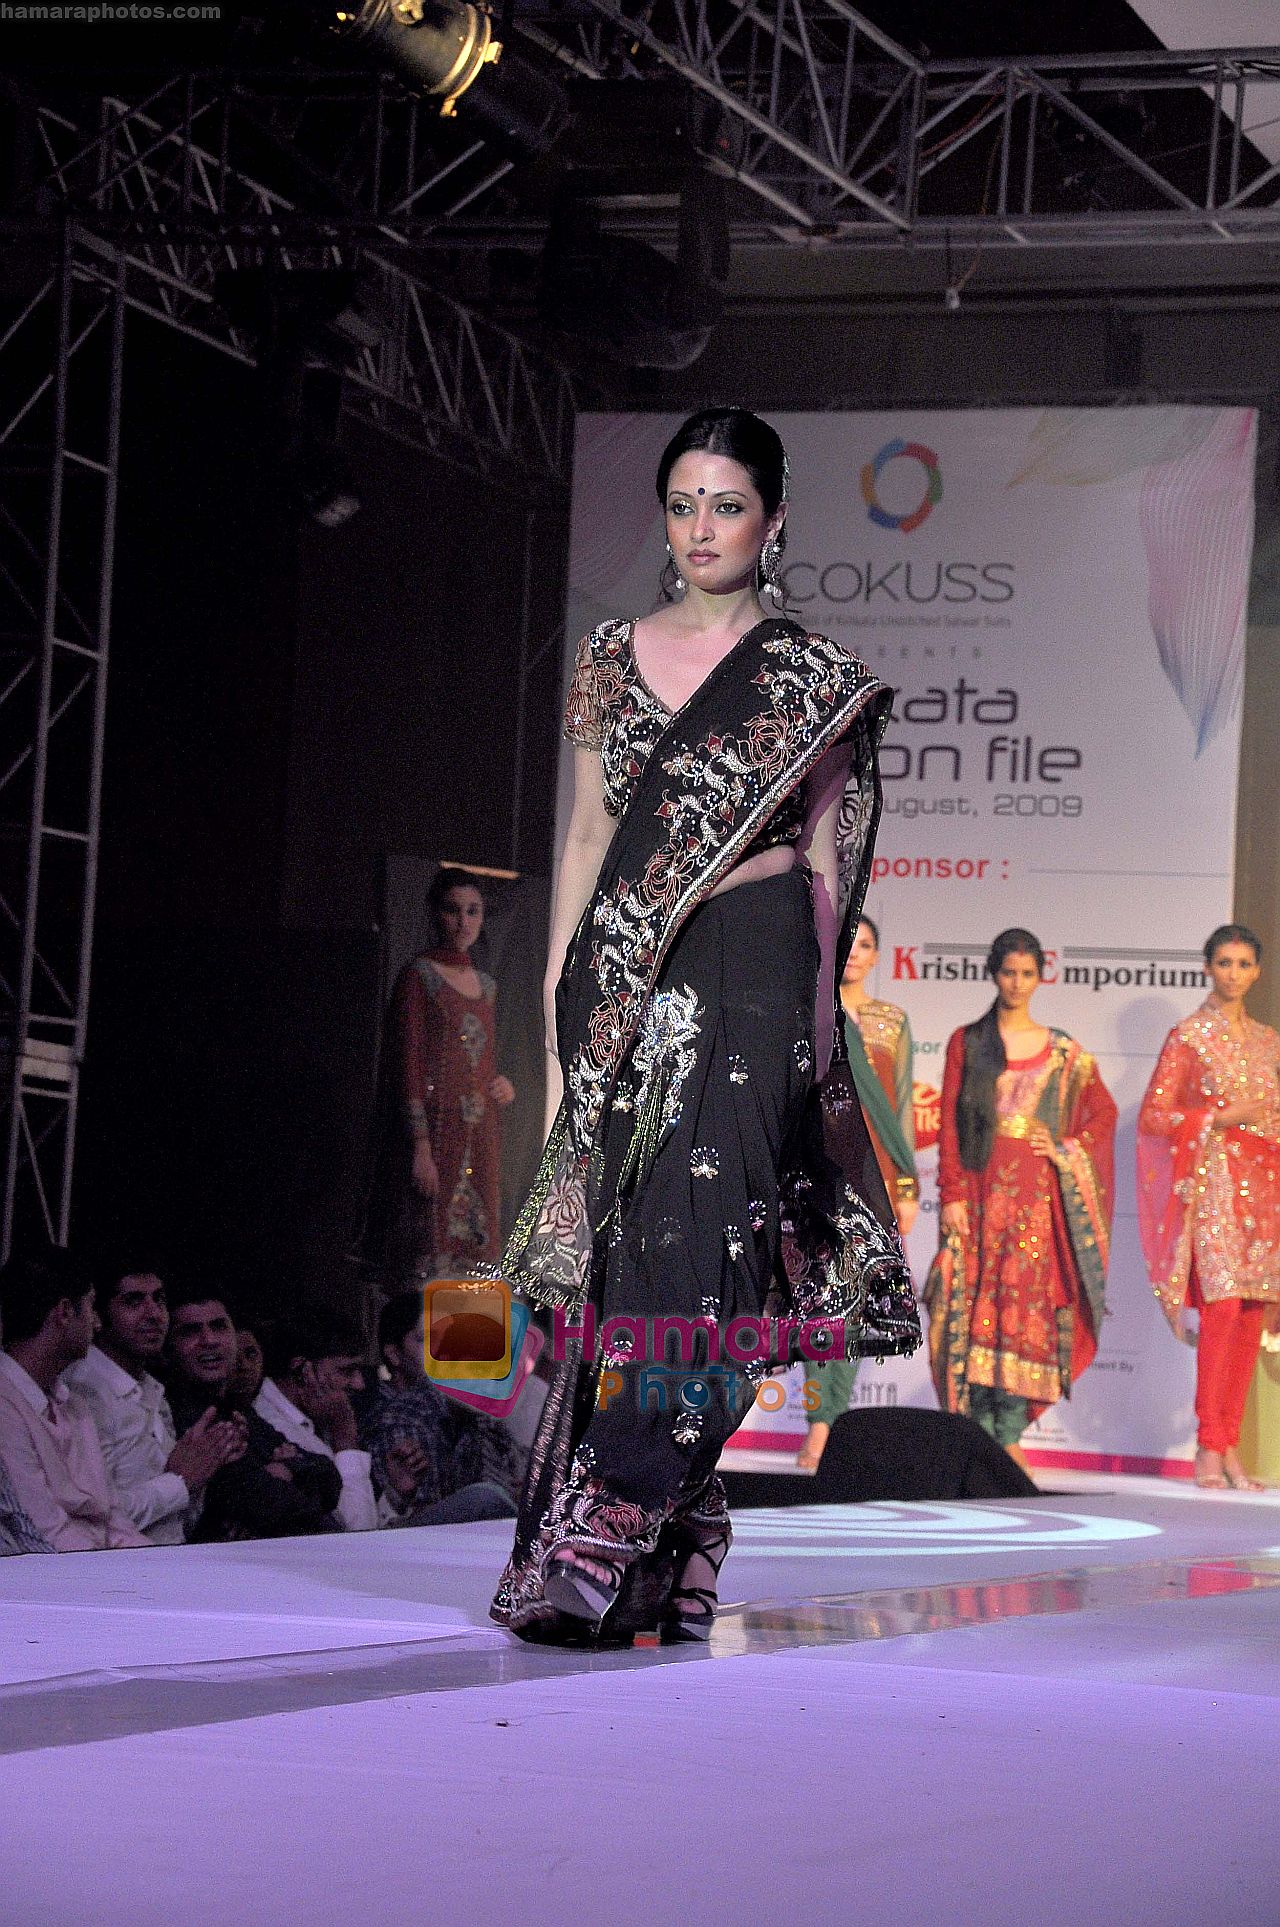 Riya Sen at COKUSS Kolkata Fashion File 09 in Kolkata on 4th Aug 2009